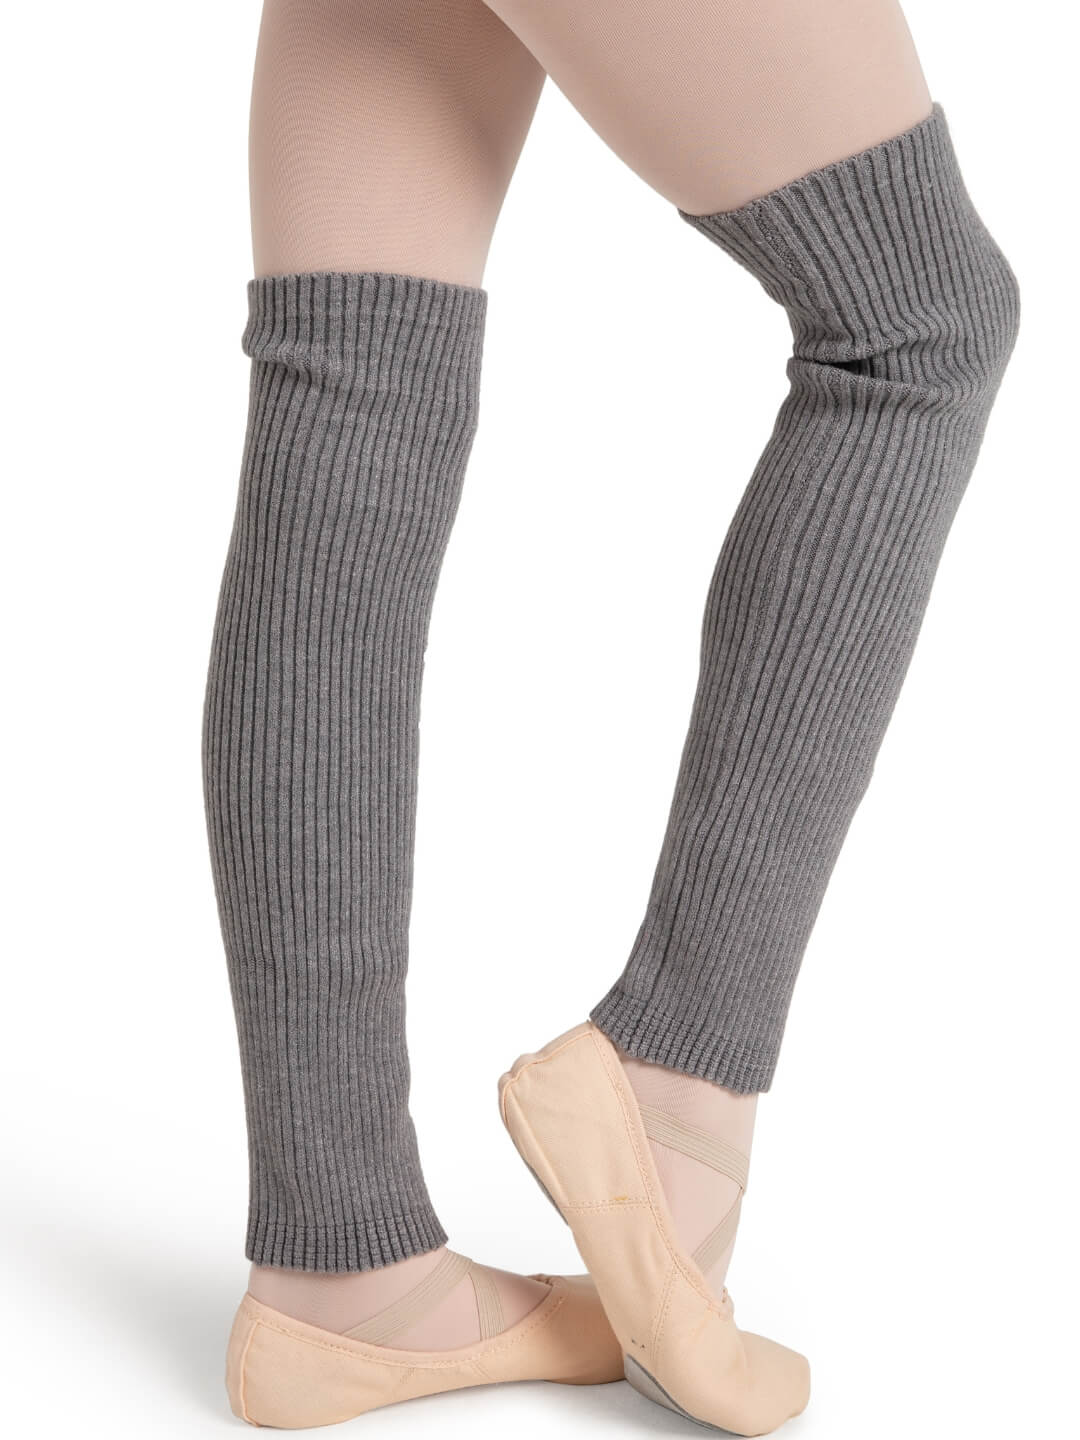 PURJKPU Women 80s Juniors Knit Leg Warmers for Ballet Yoga Dance